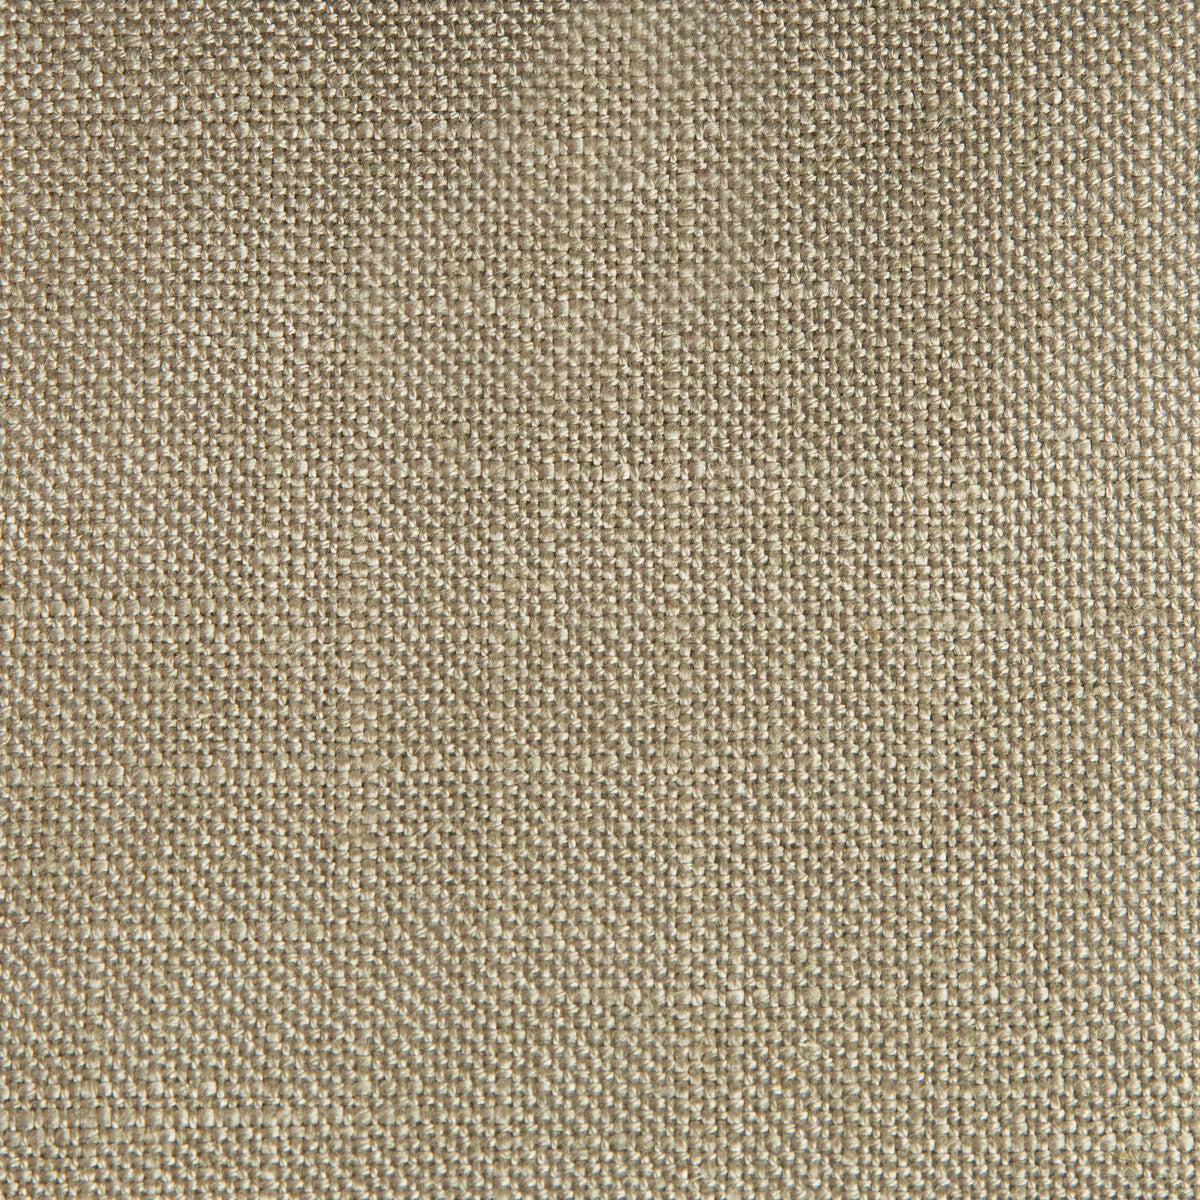 Peru fabric in piedra color - pattern GDT5548.010.0 - by Gaston y Daniela in the Gaston Nuevo Mundo collection